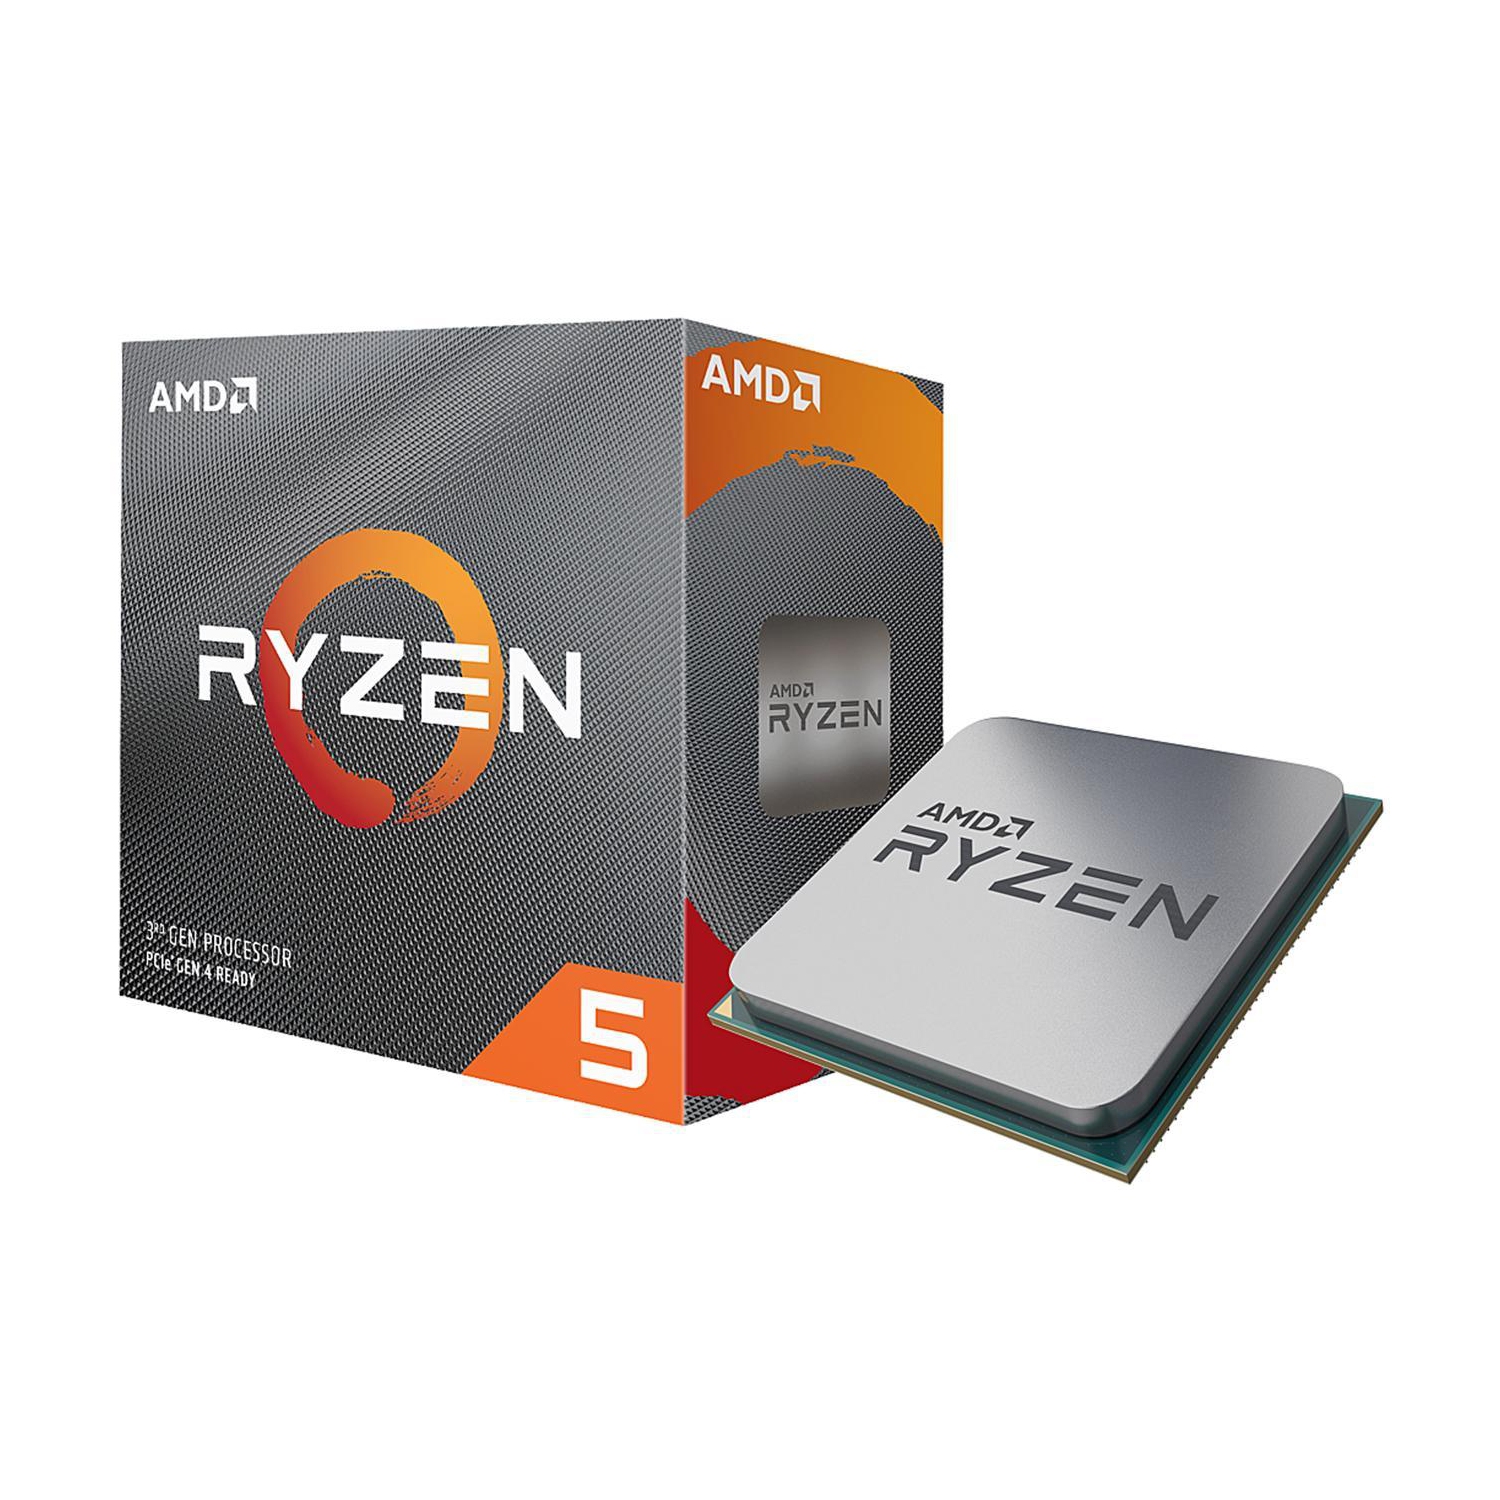 AMD RYZEN 5 3600 6-Core 3.6 GHz (4.2 GHz Max Boost) Socket AM4 65W